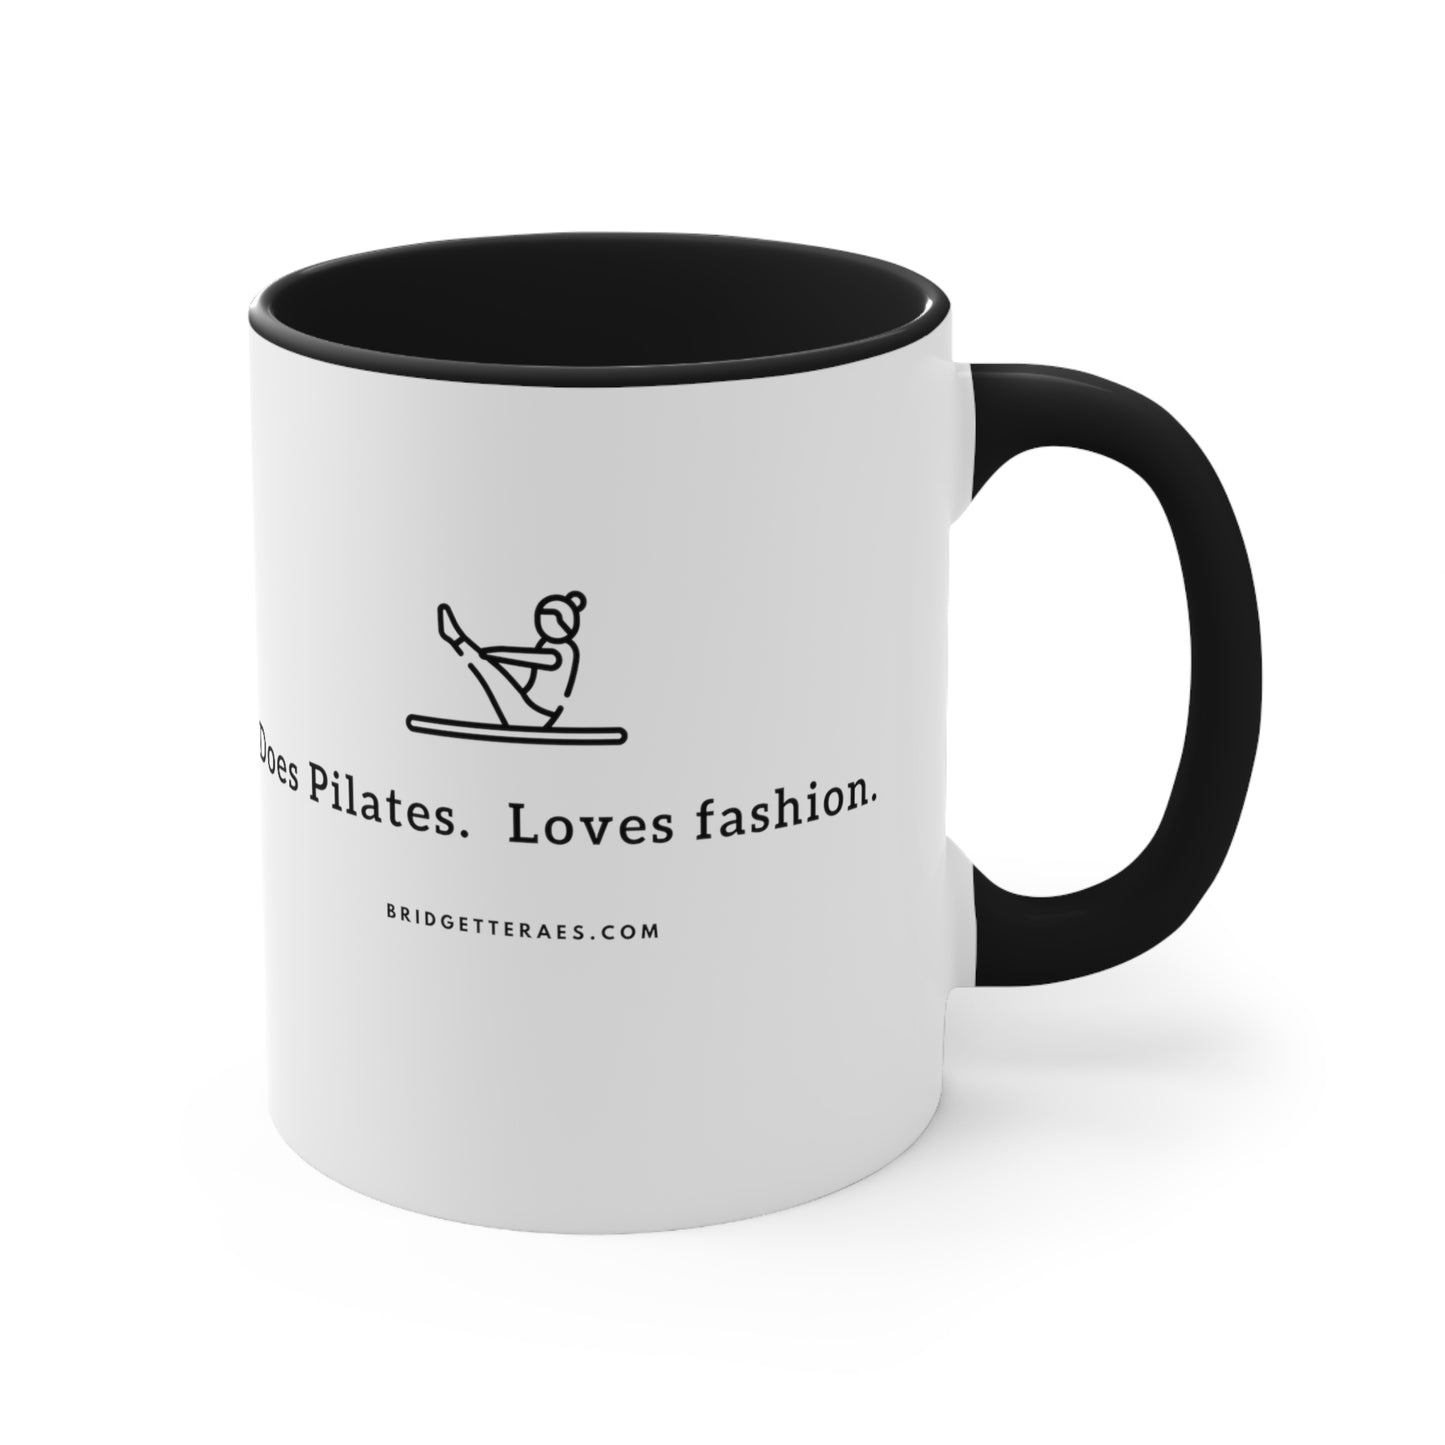 Does Pilates.  Loves Fashion. 11oz Accent Coffee Mug